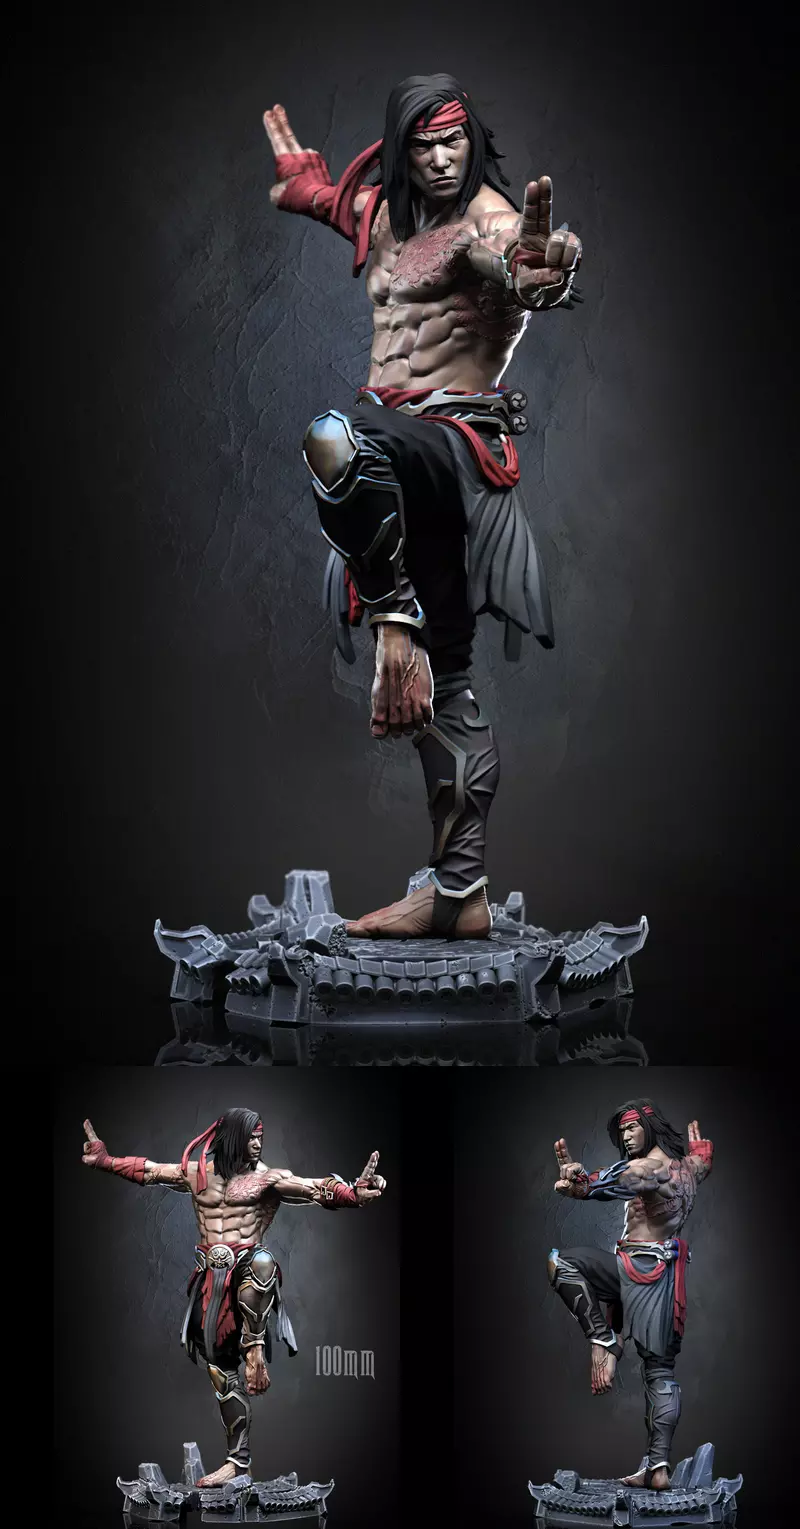 Liu Kang - Mortal Kombat